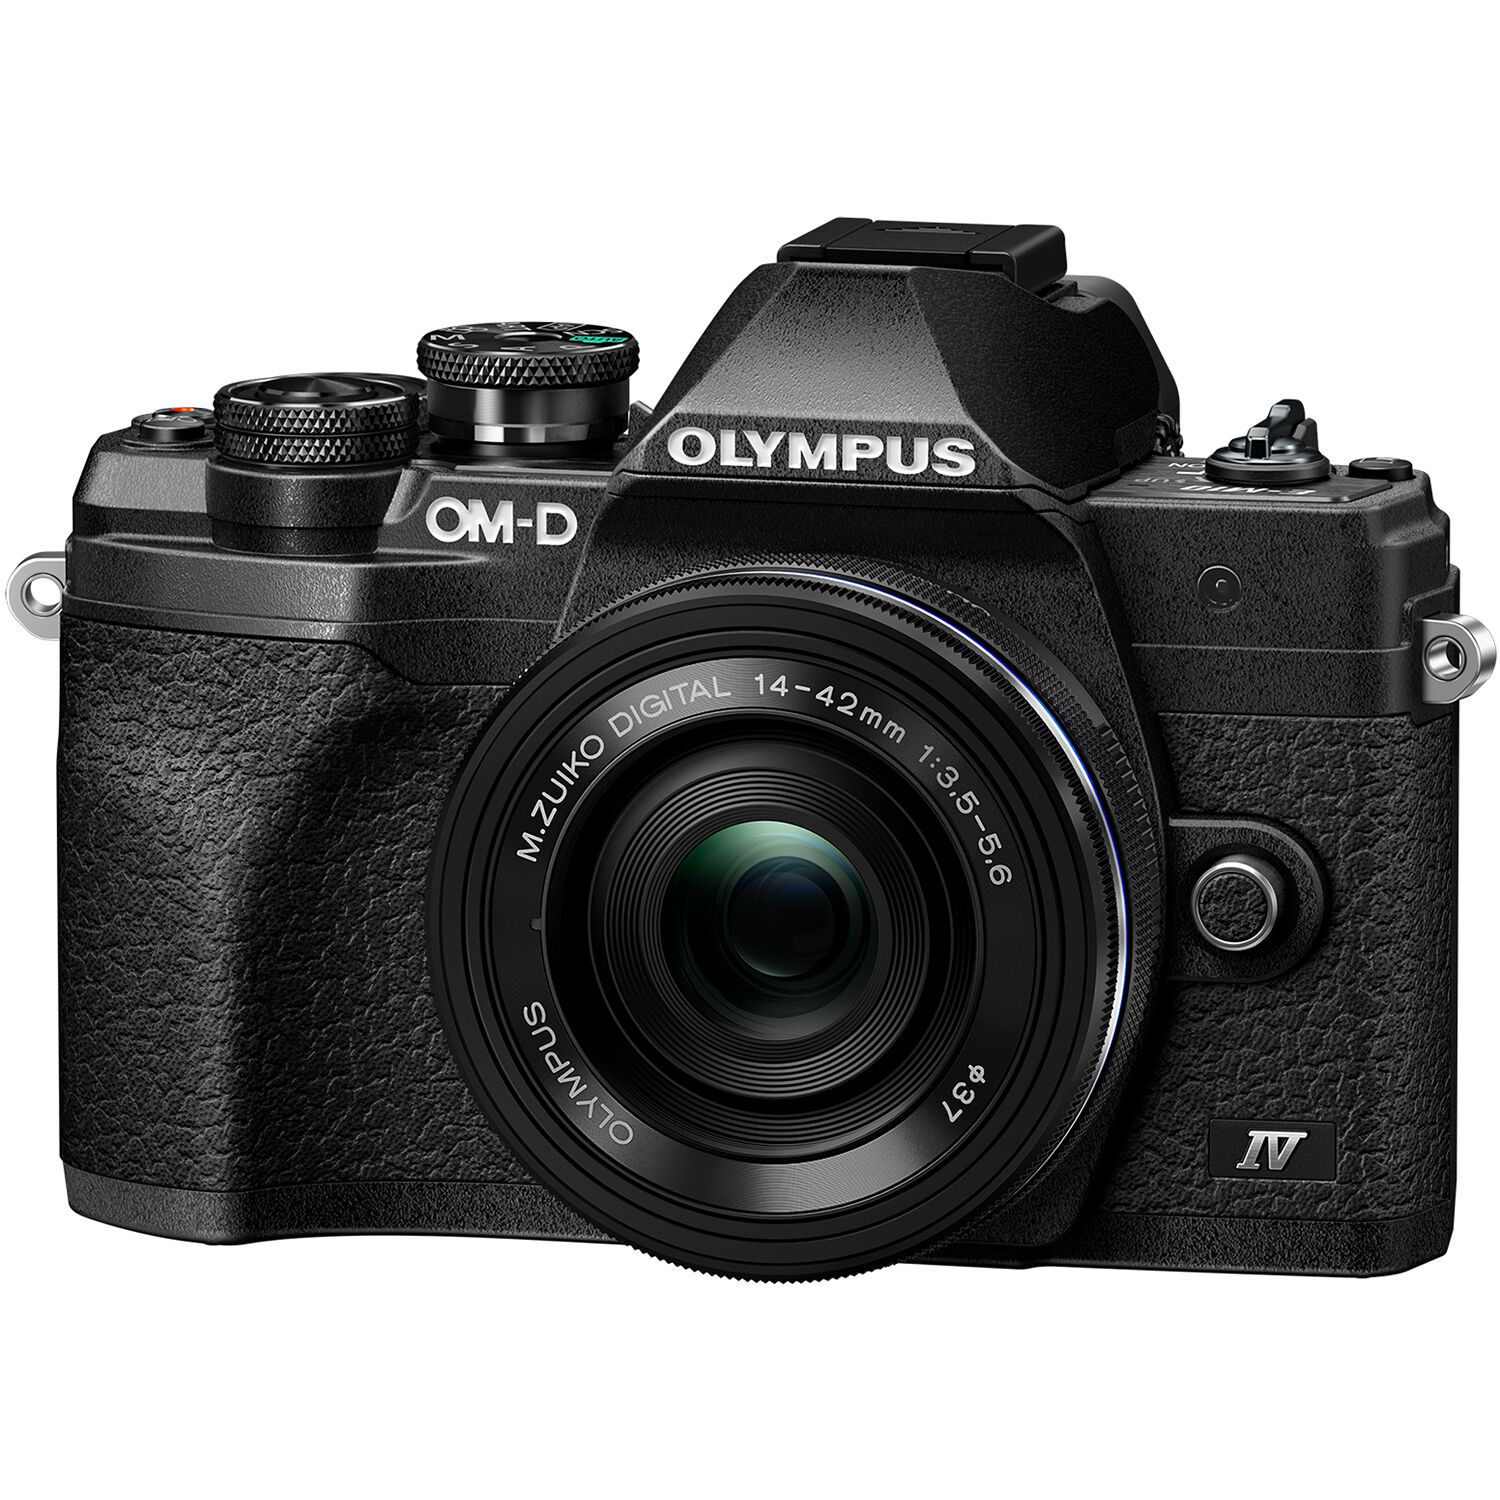 Olympus OM-D E-M10 Mark IV Camera with 14-42mm EZ Lens Kit (Black)